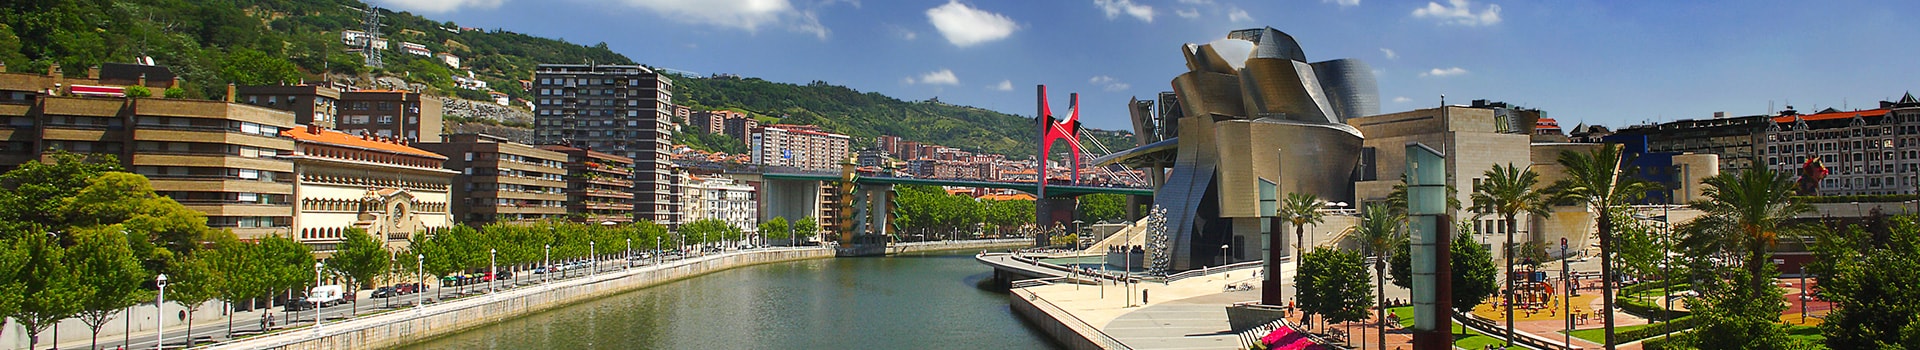  - Bilbao